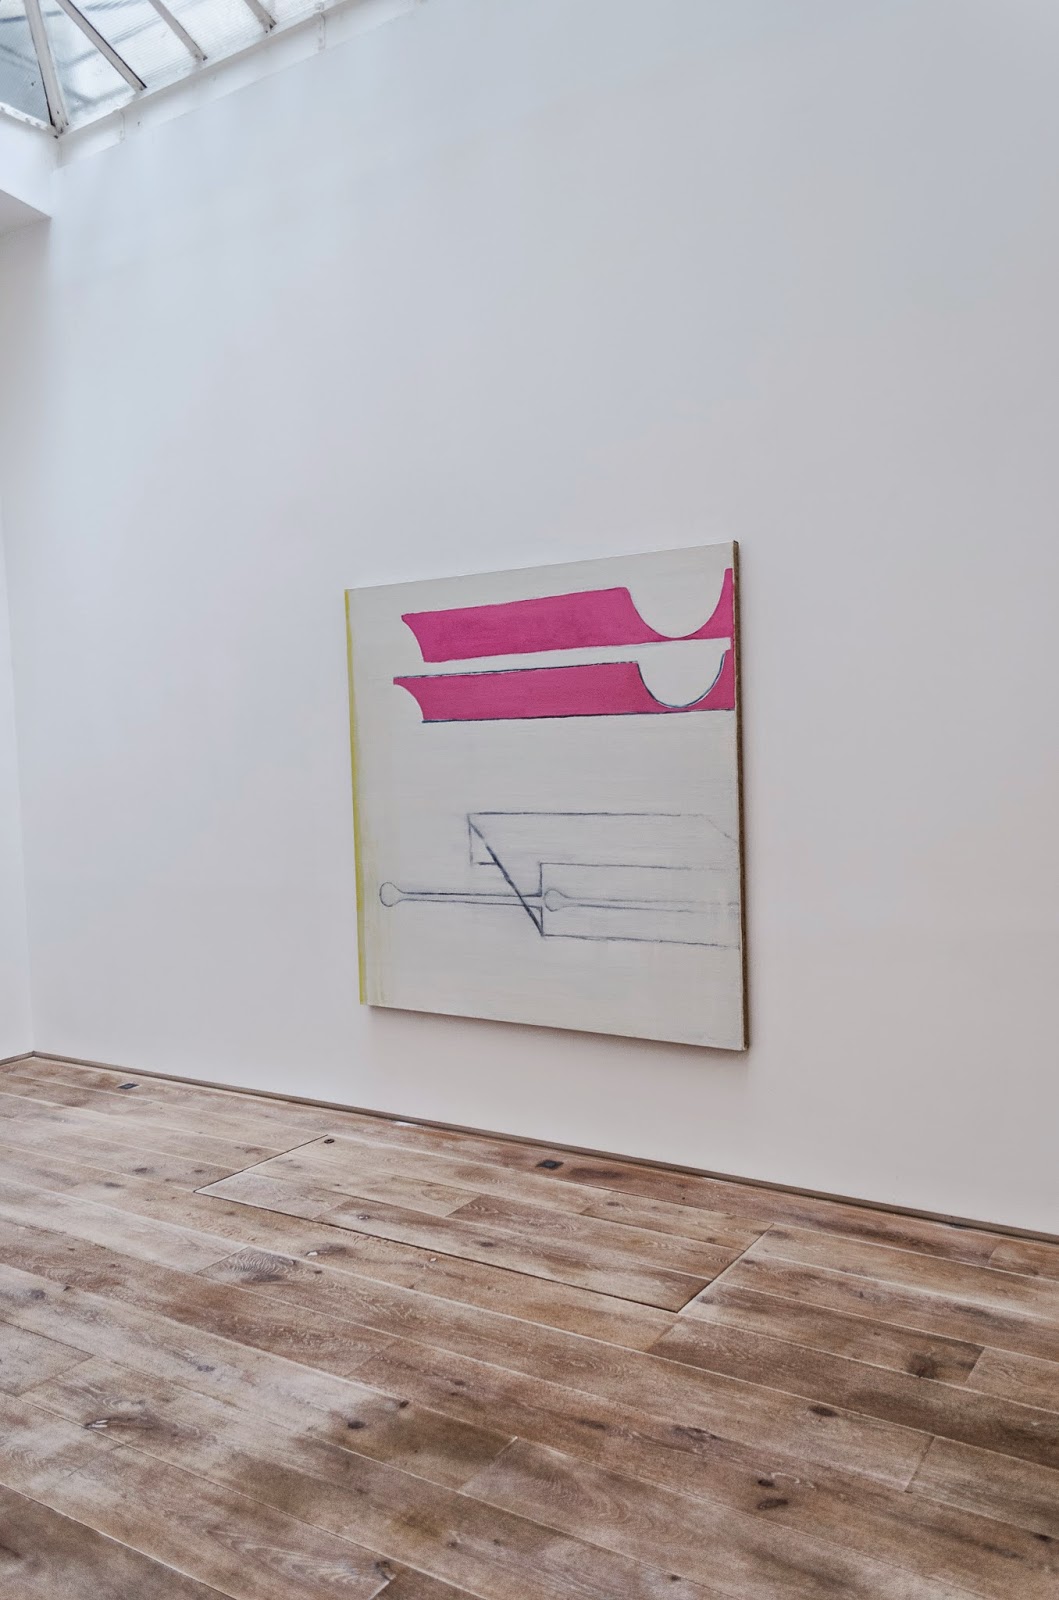 Galerie Eric Dupont, Paris: Solo show, 2014